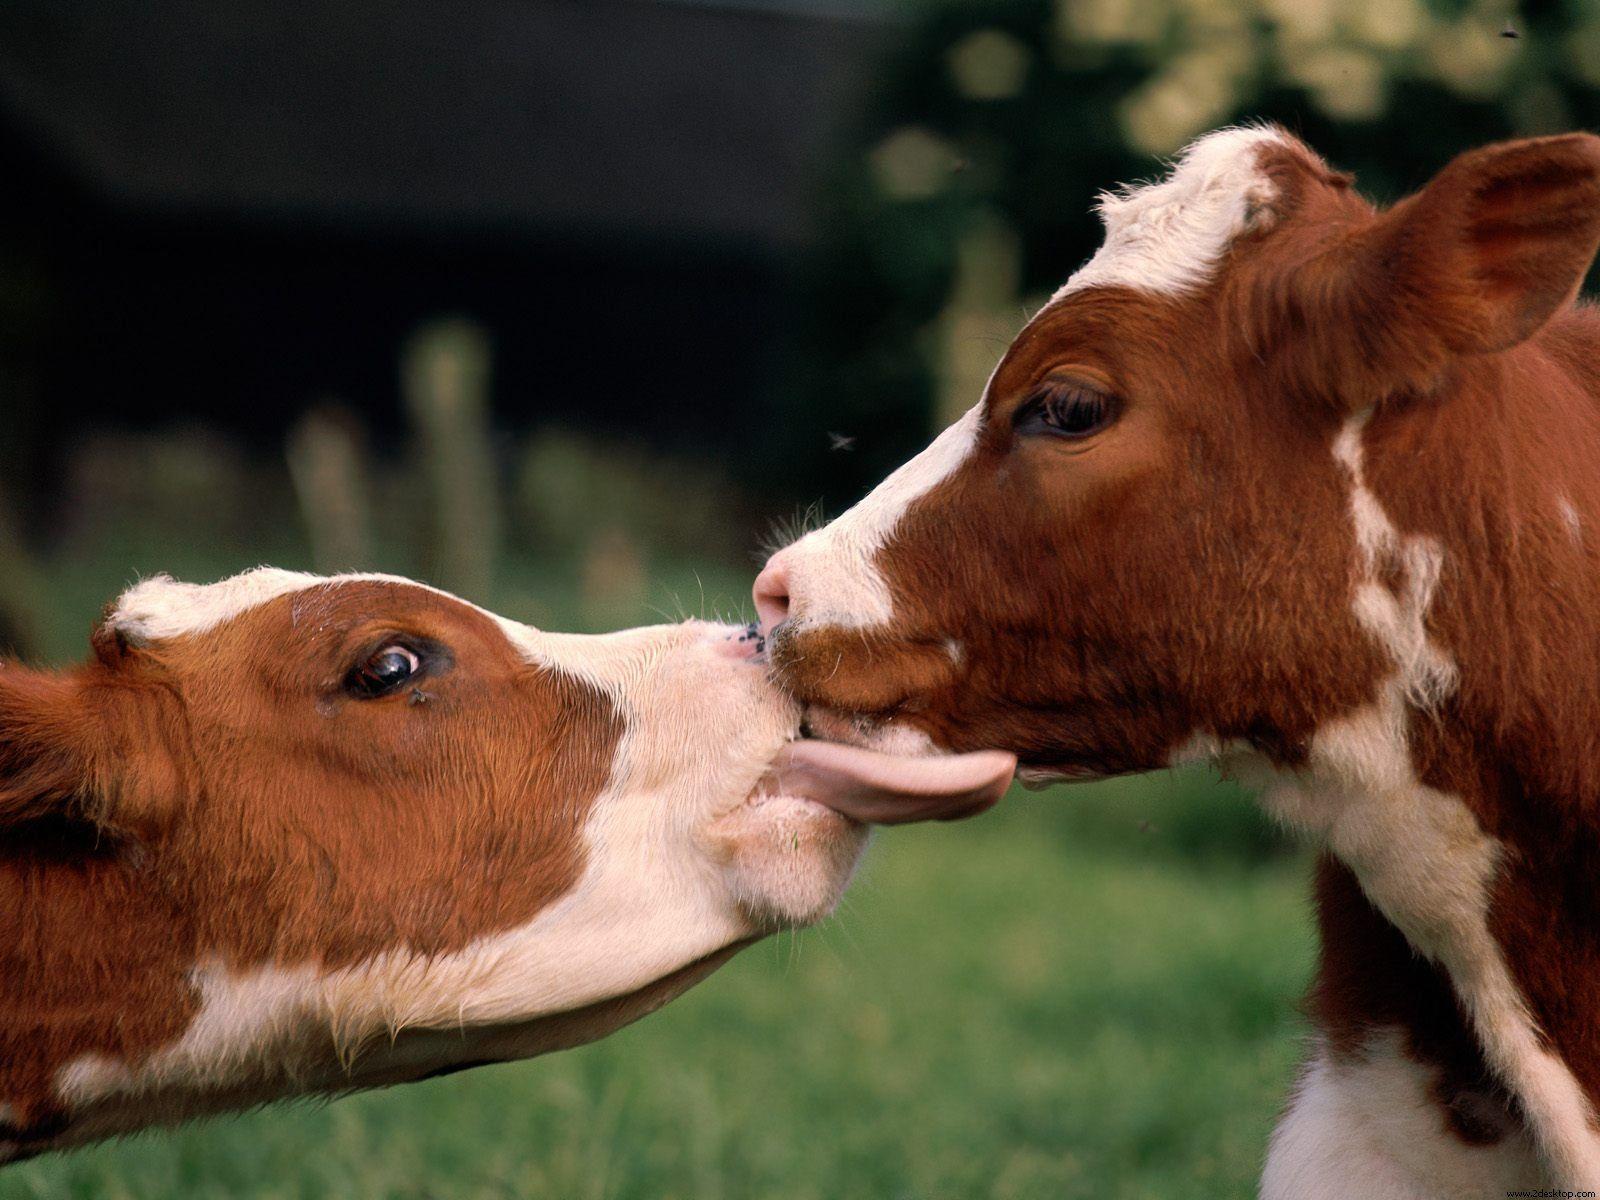 Wallpaper: Cows kissing HD Wallpaper 514 - Cow Animal HD